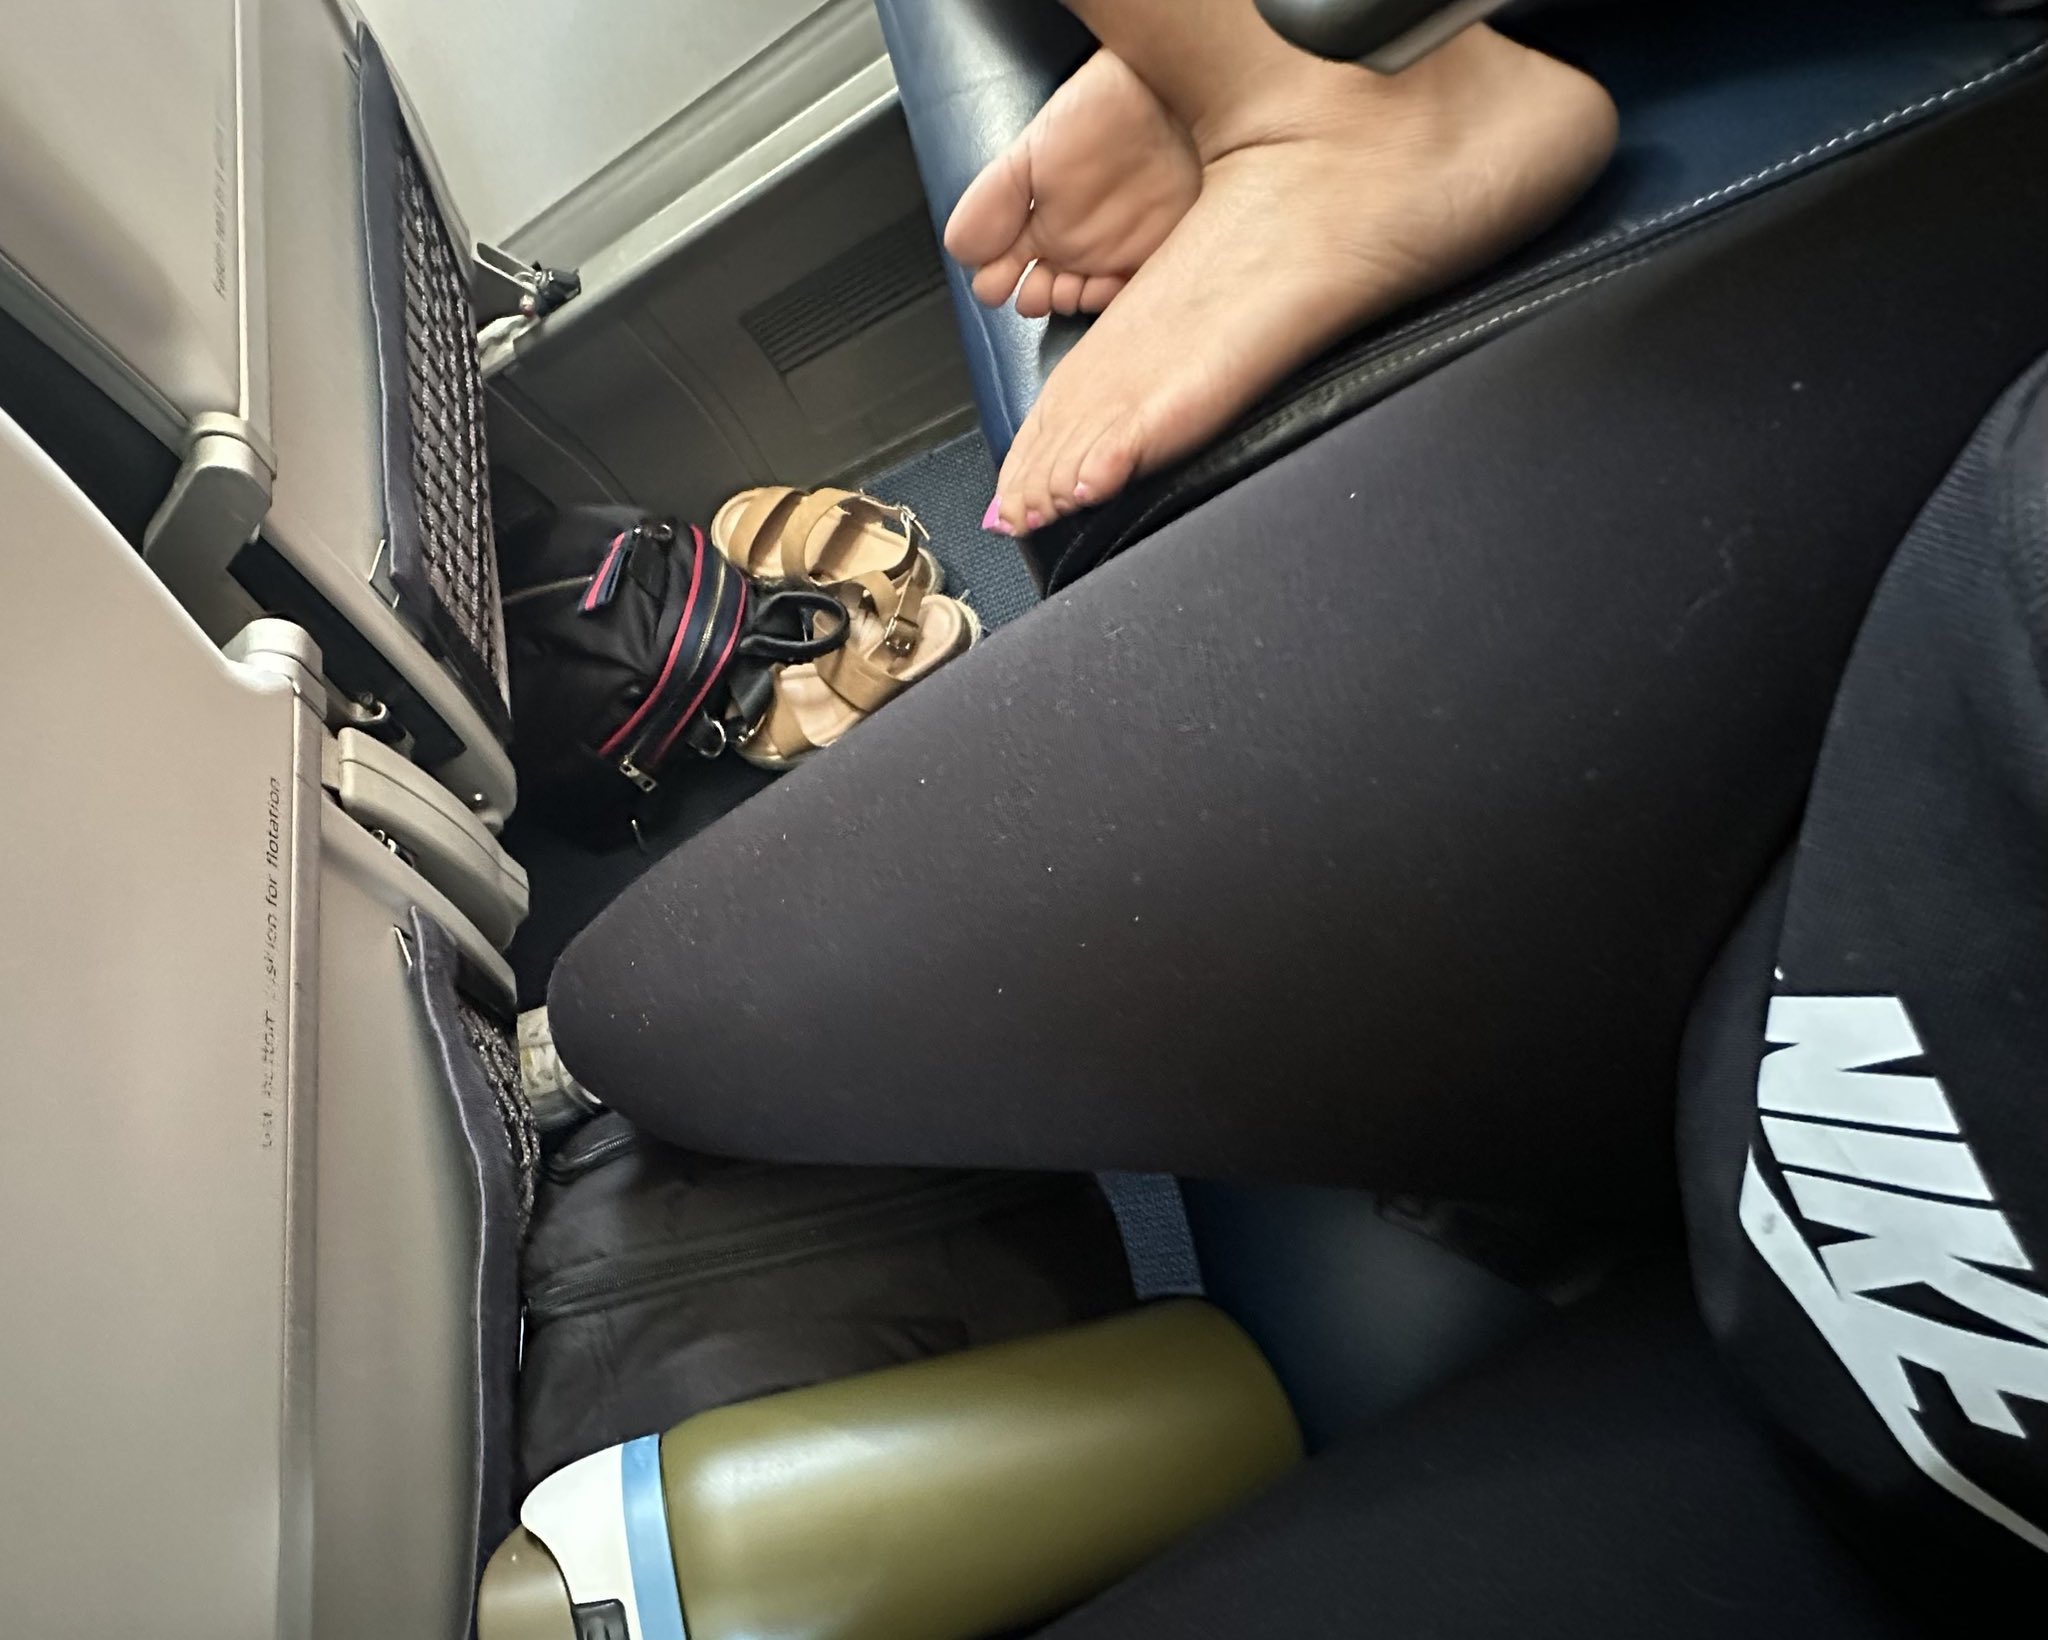 Airplane Seatmate Barefoot